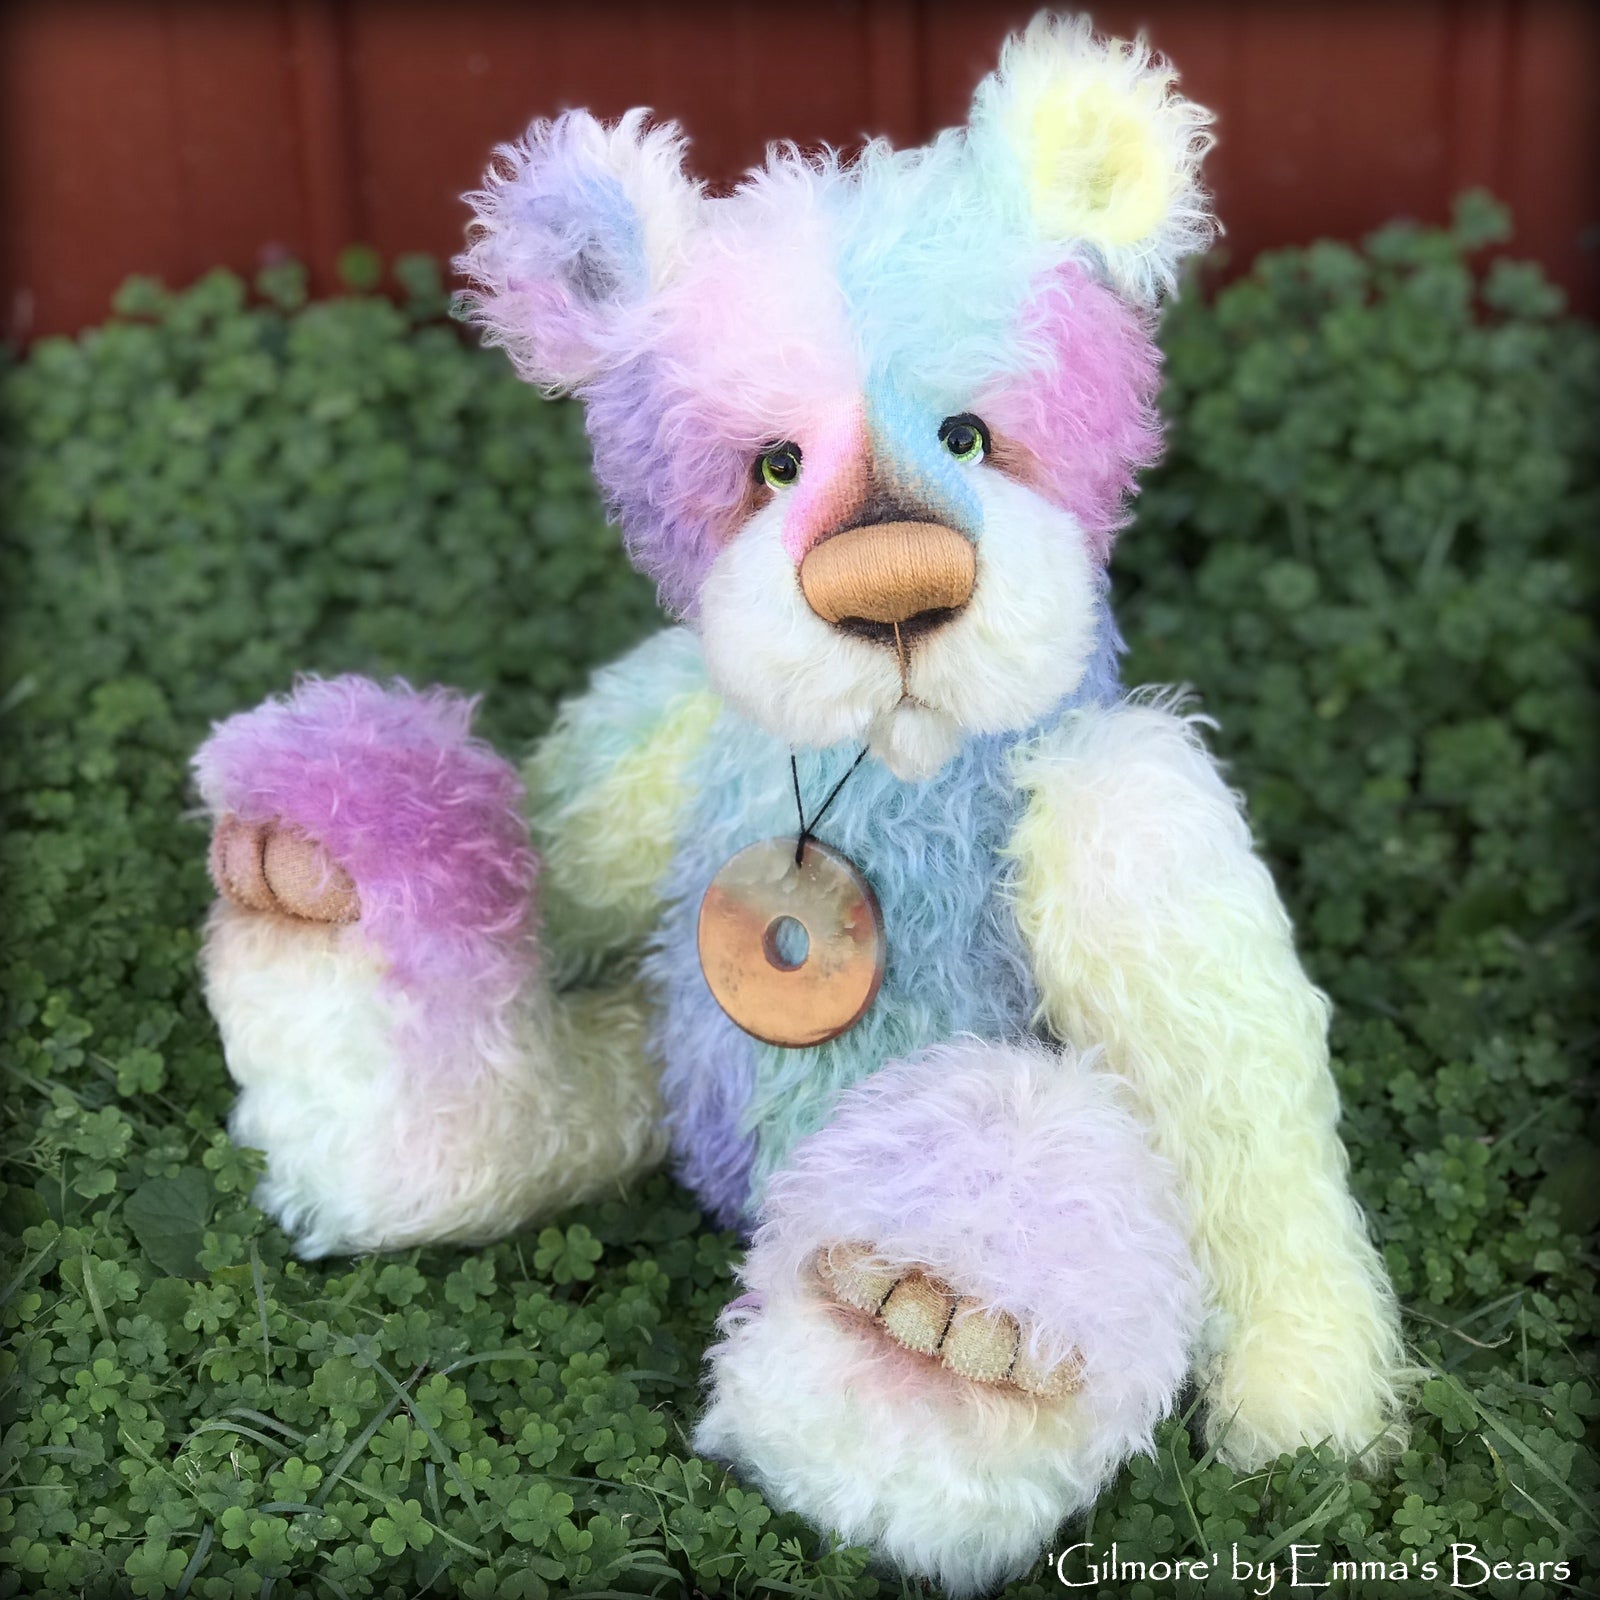 Gilmore - 18" Hand-Dyed rainbow Artist Bear by Emma's Bears - OOAK